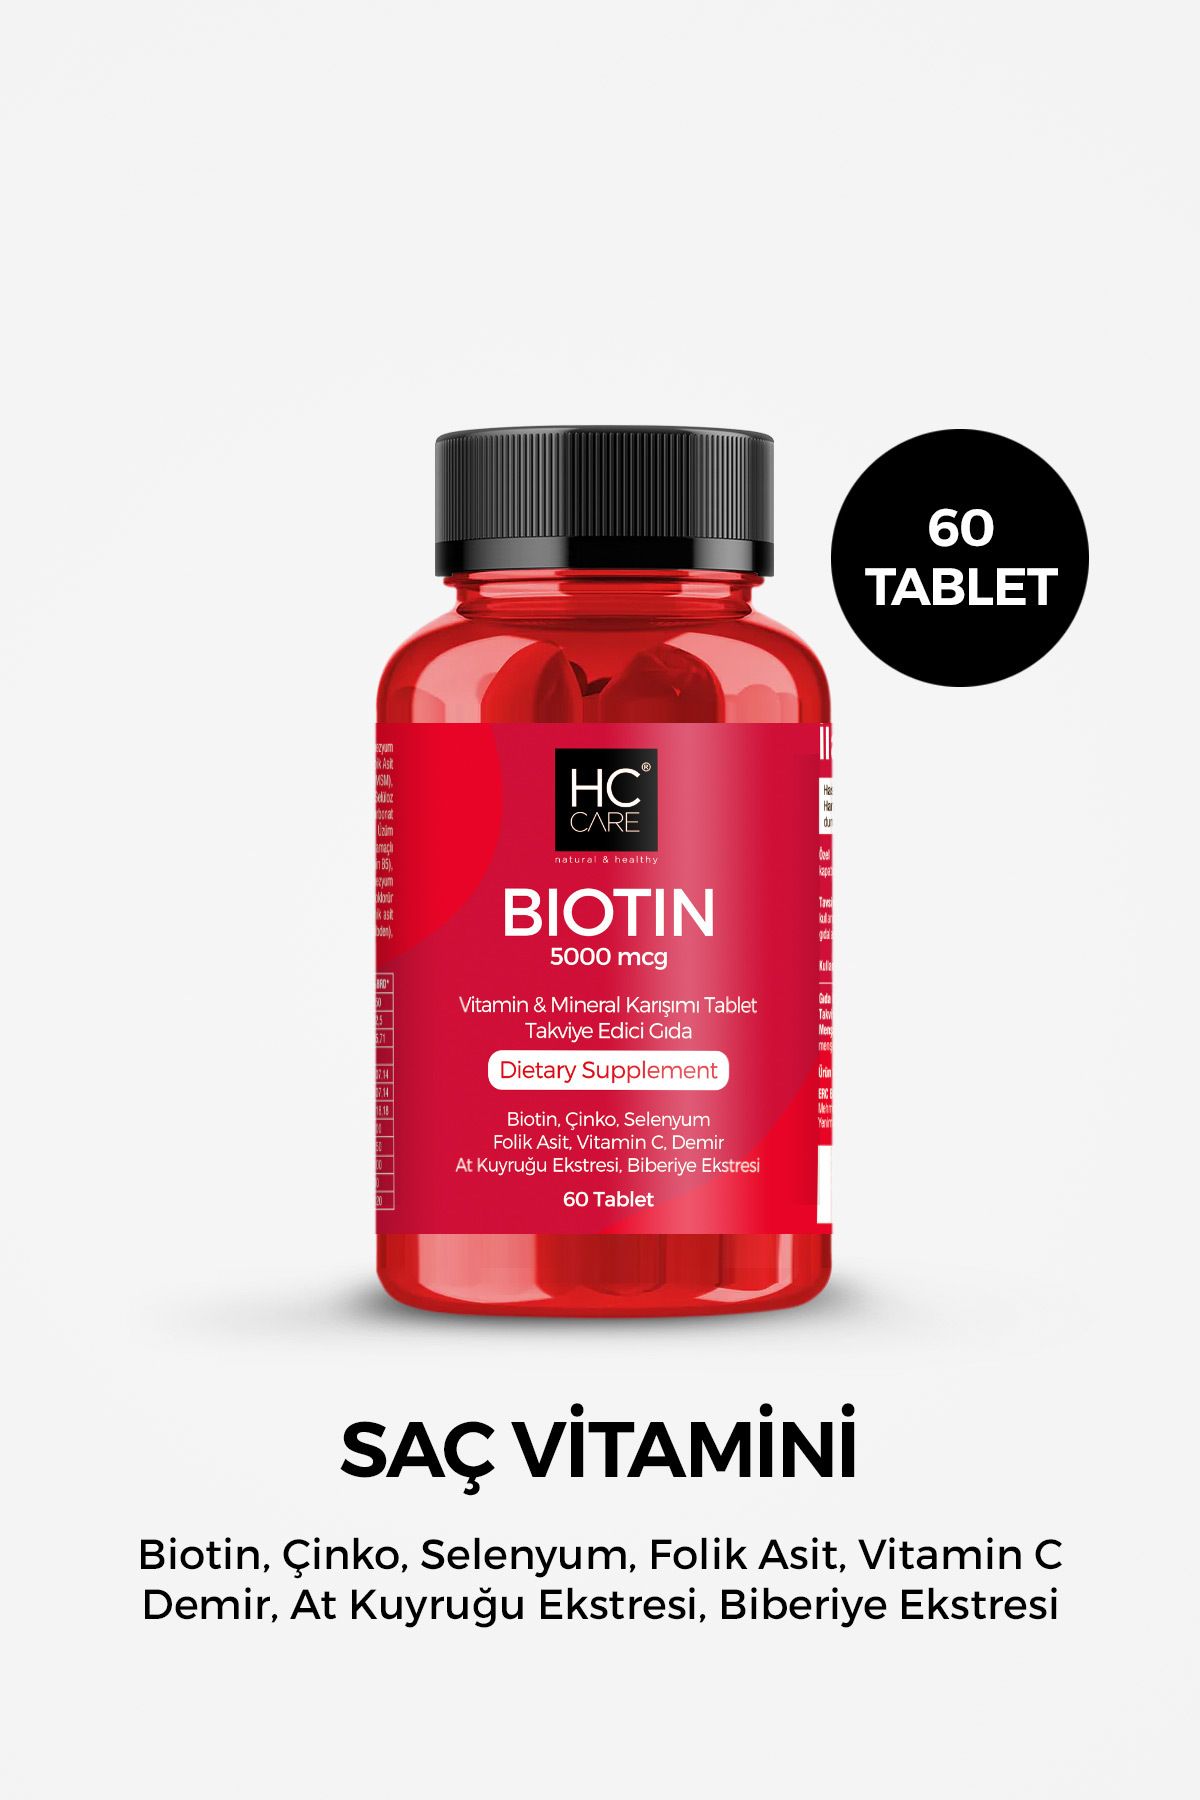 HC Care Saç Vitamini 60 Tablet - Biotin, Çinko, Selenyum, Folik Asit, Vitamin C, Demir, At Kuyruğu, Biberiye